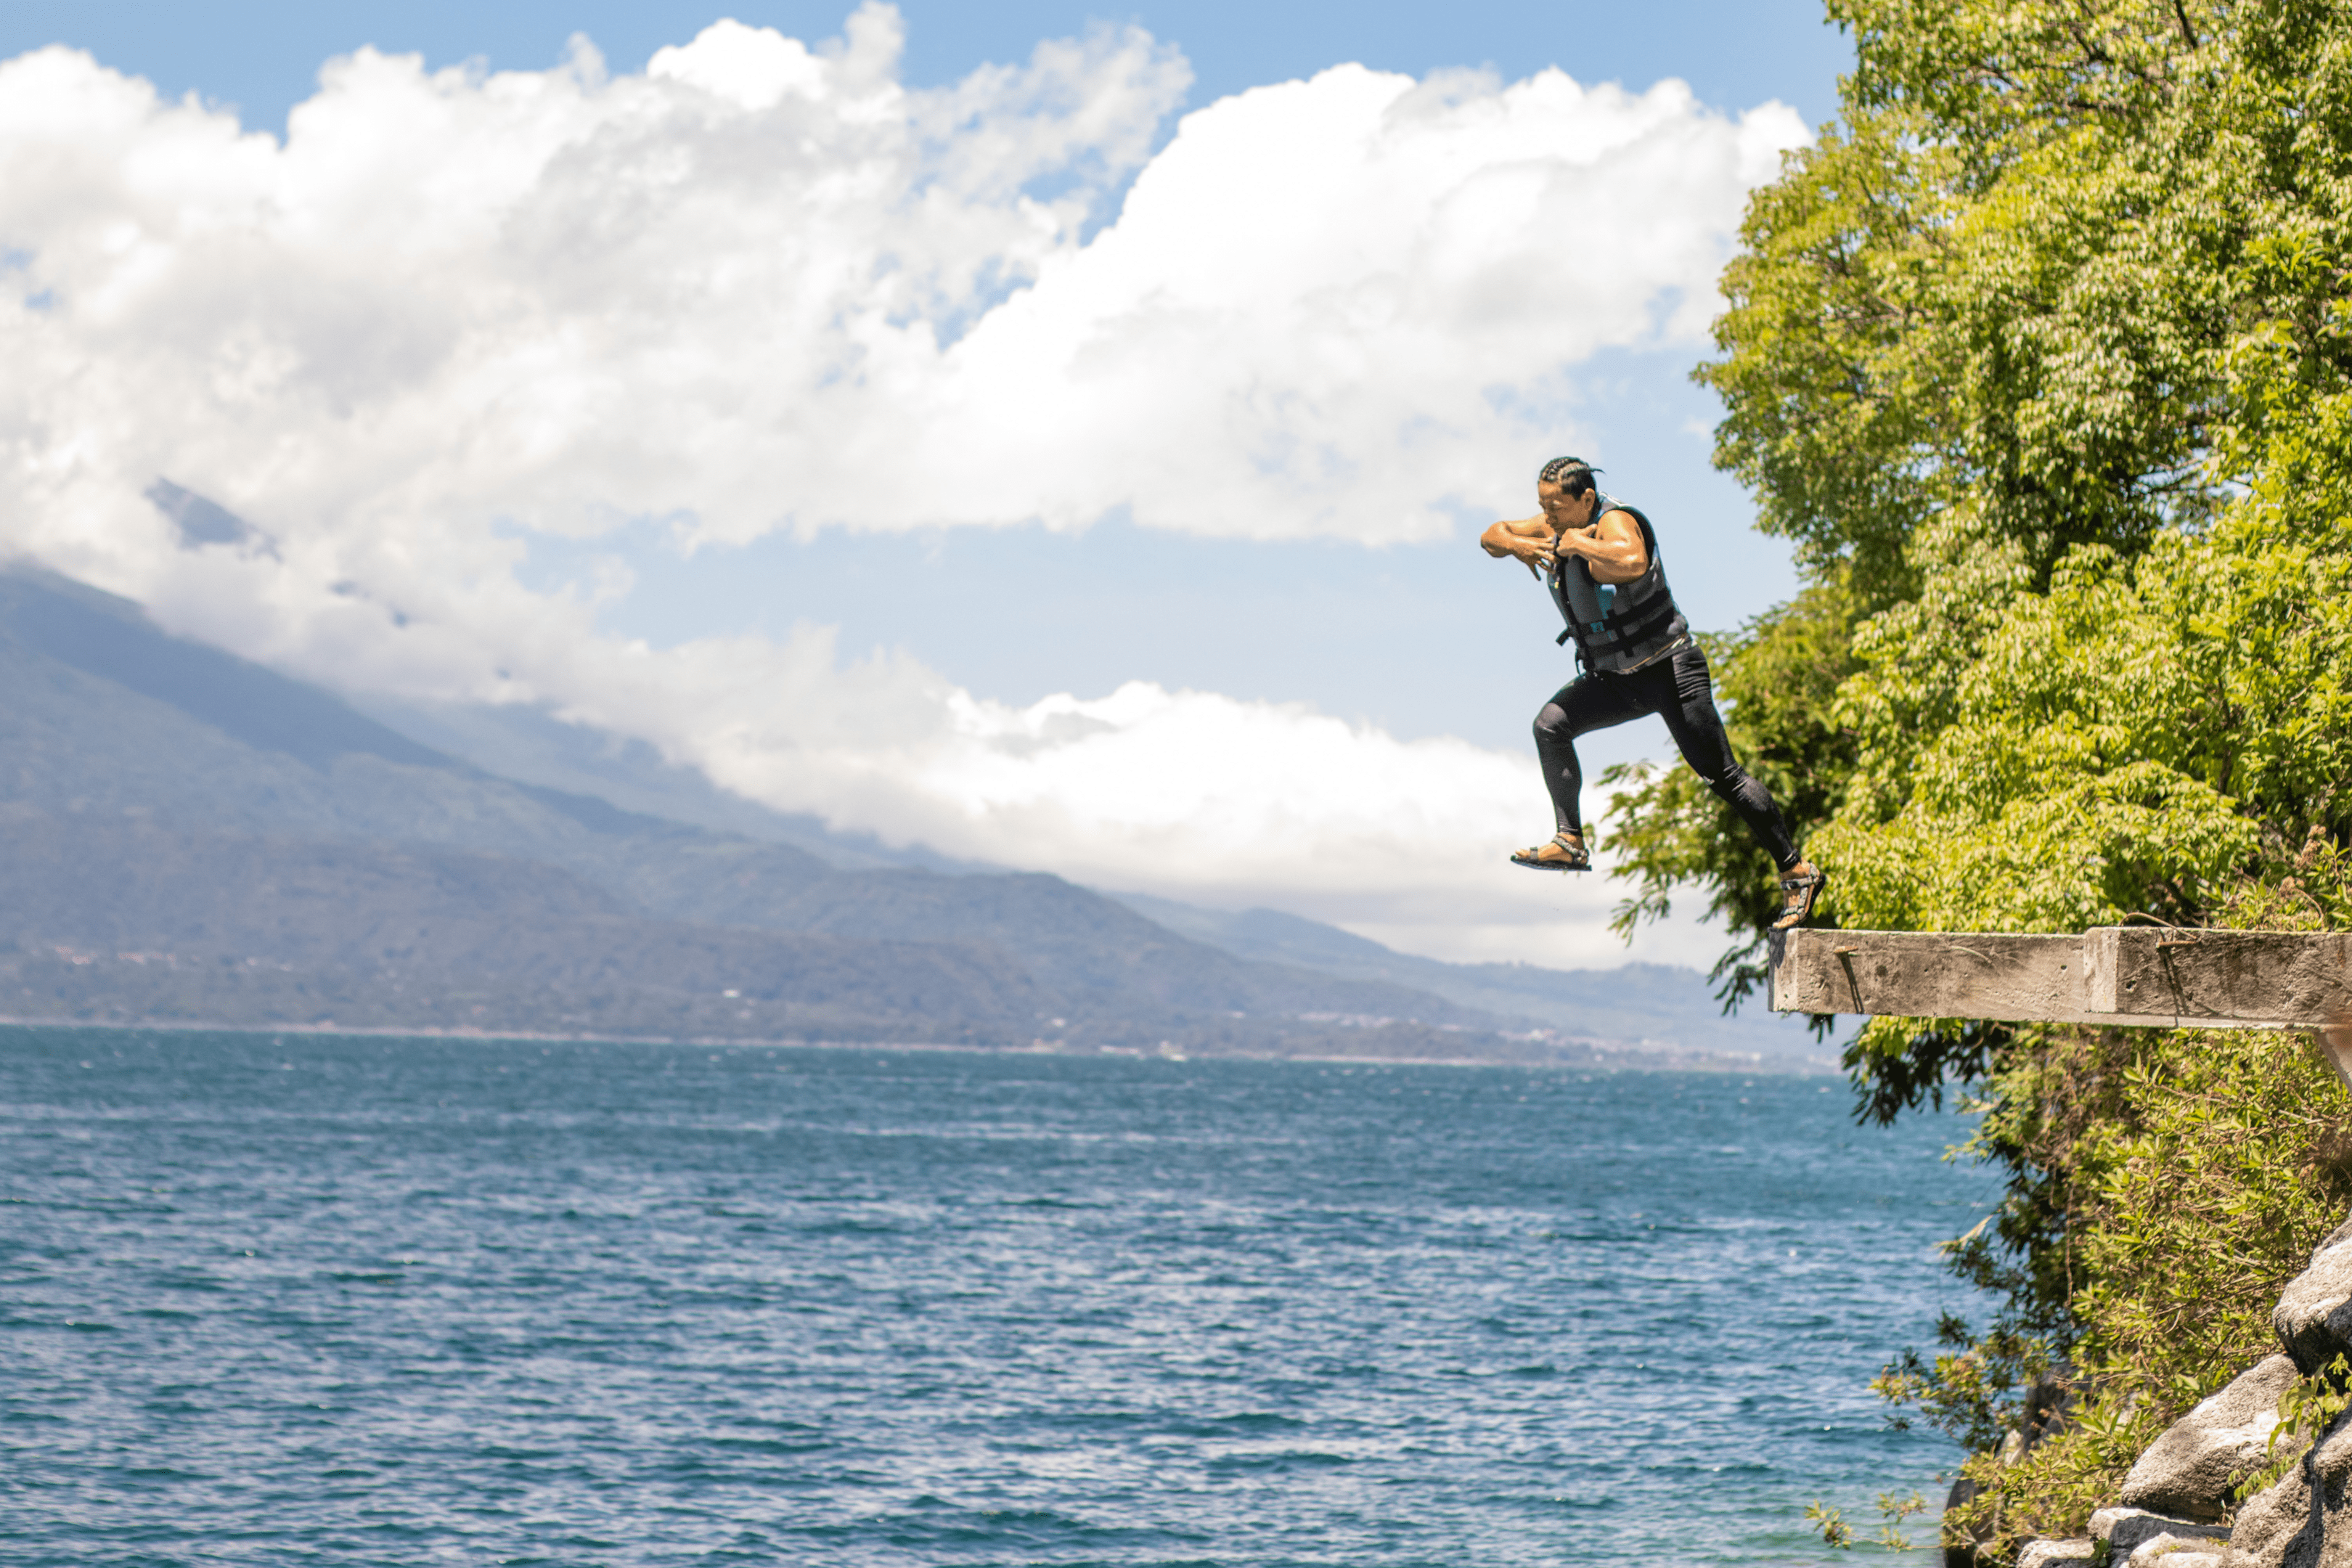 Man jumps from cliffside into huge lake below.